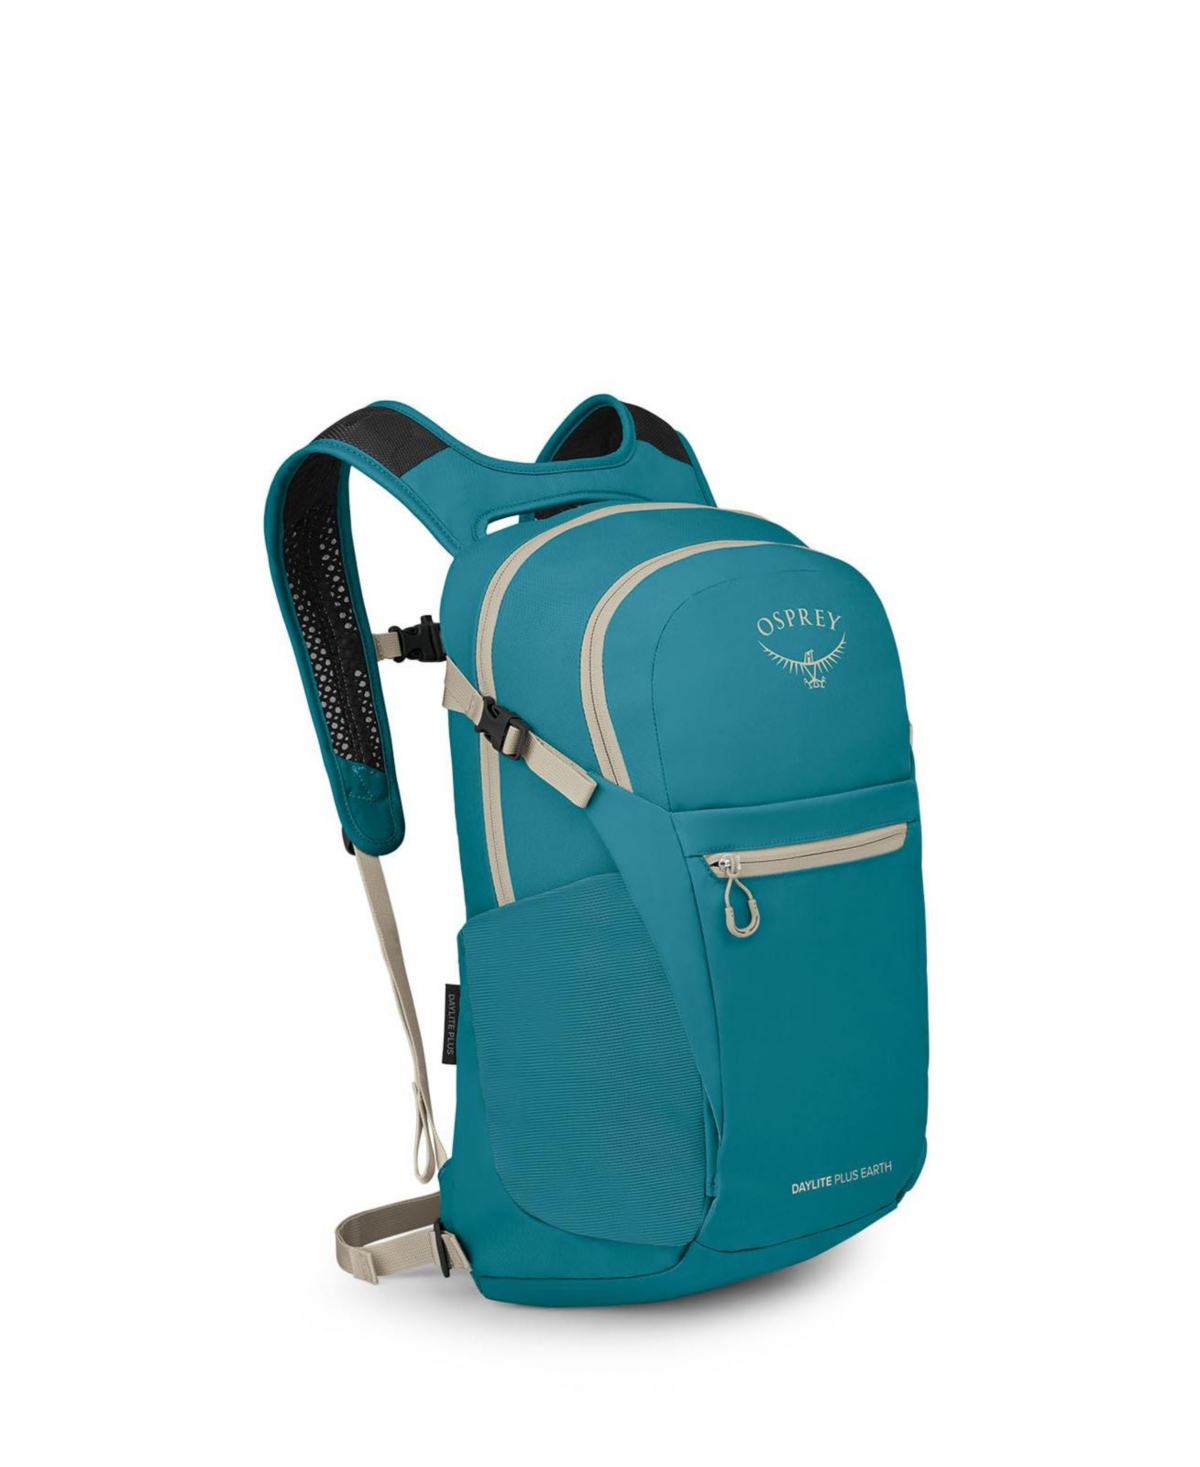 Daylite Plus Daypack - Tropical blue